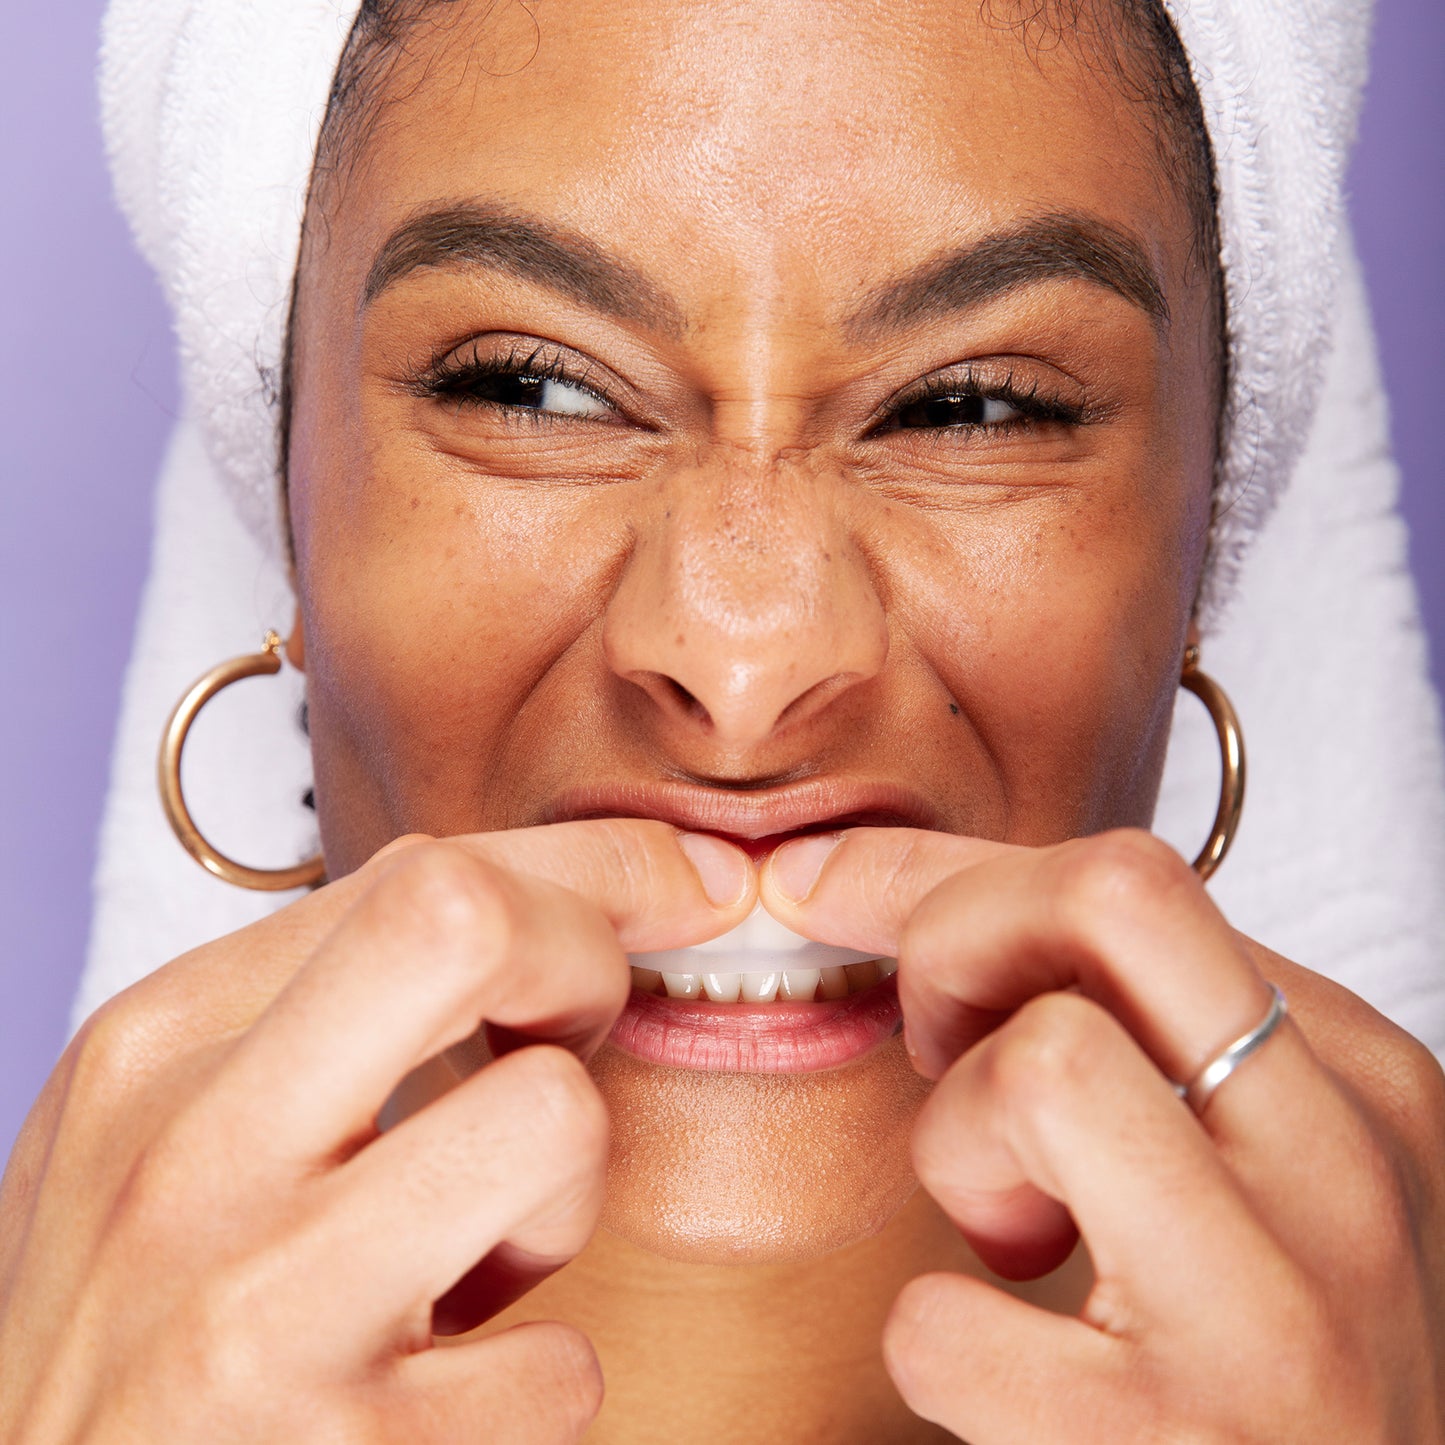 Dissolving PAP Teeth Whitening Strips